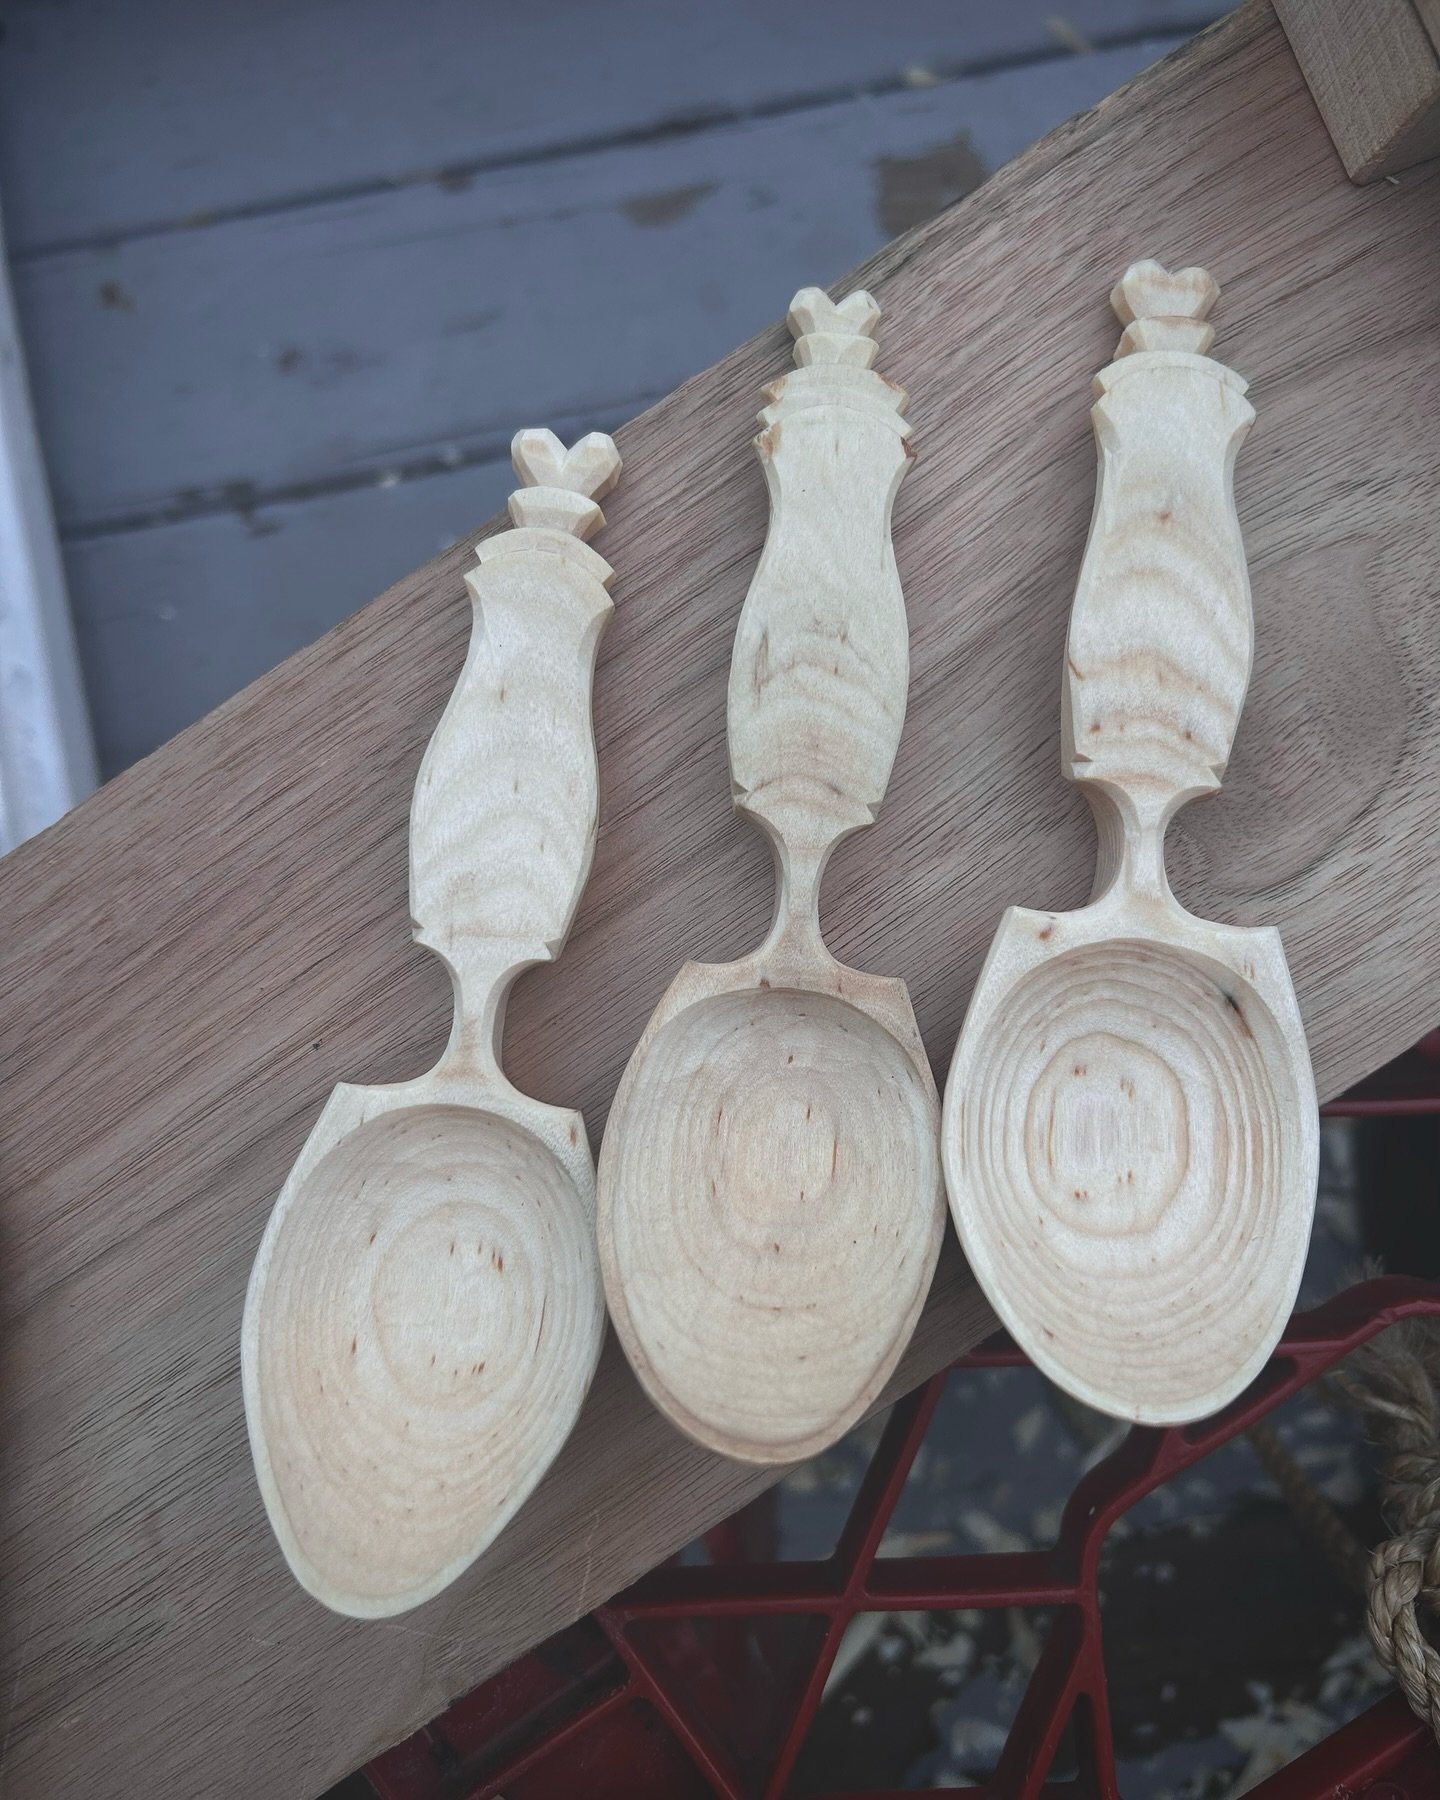 One more before sunset.
 
 
 
 
 
 

 #spooncarving #greenwoodworking #kuksa #sloyd #spoons #handcraft #handmade #maker #kitchendecor #woodenspoons
#handcarved #weddinggift #slowcraft #bushcraft #coffee #espresso #wood #viking #coffeelover #craftbrew